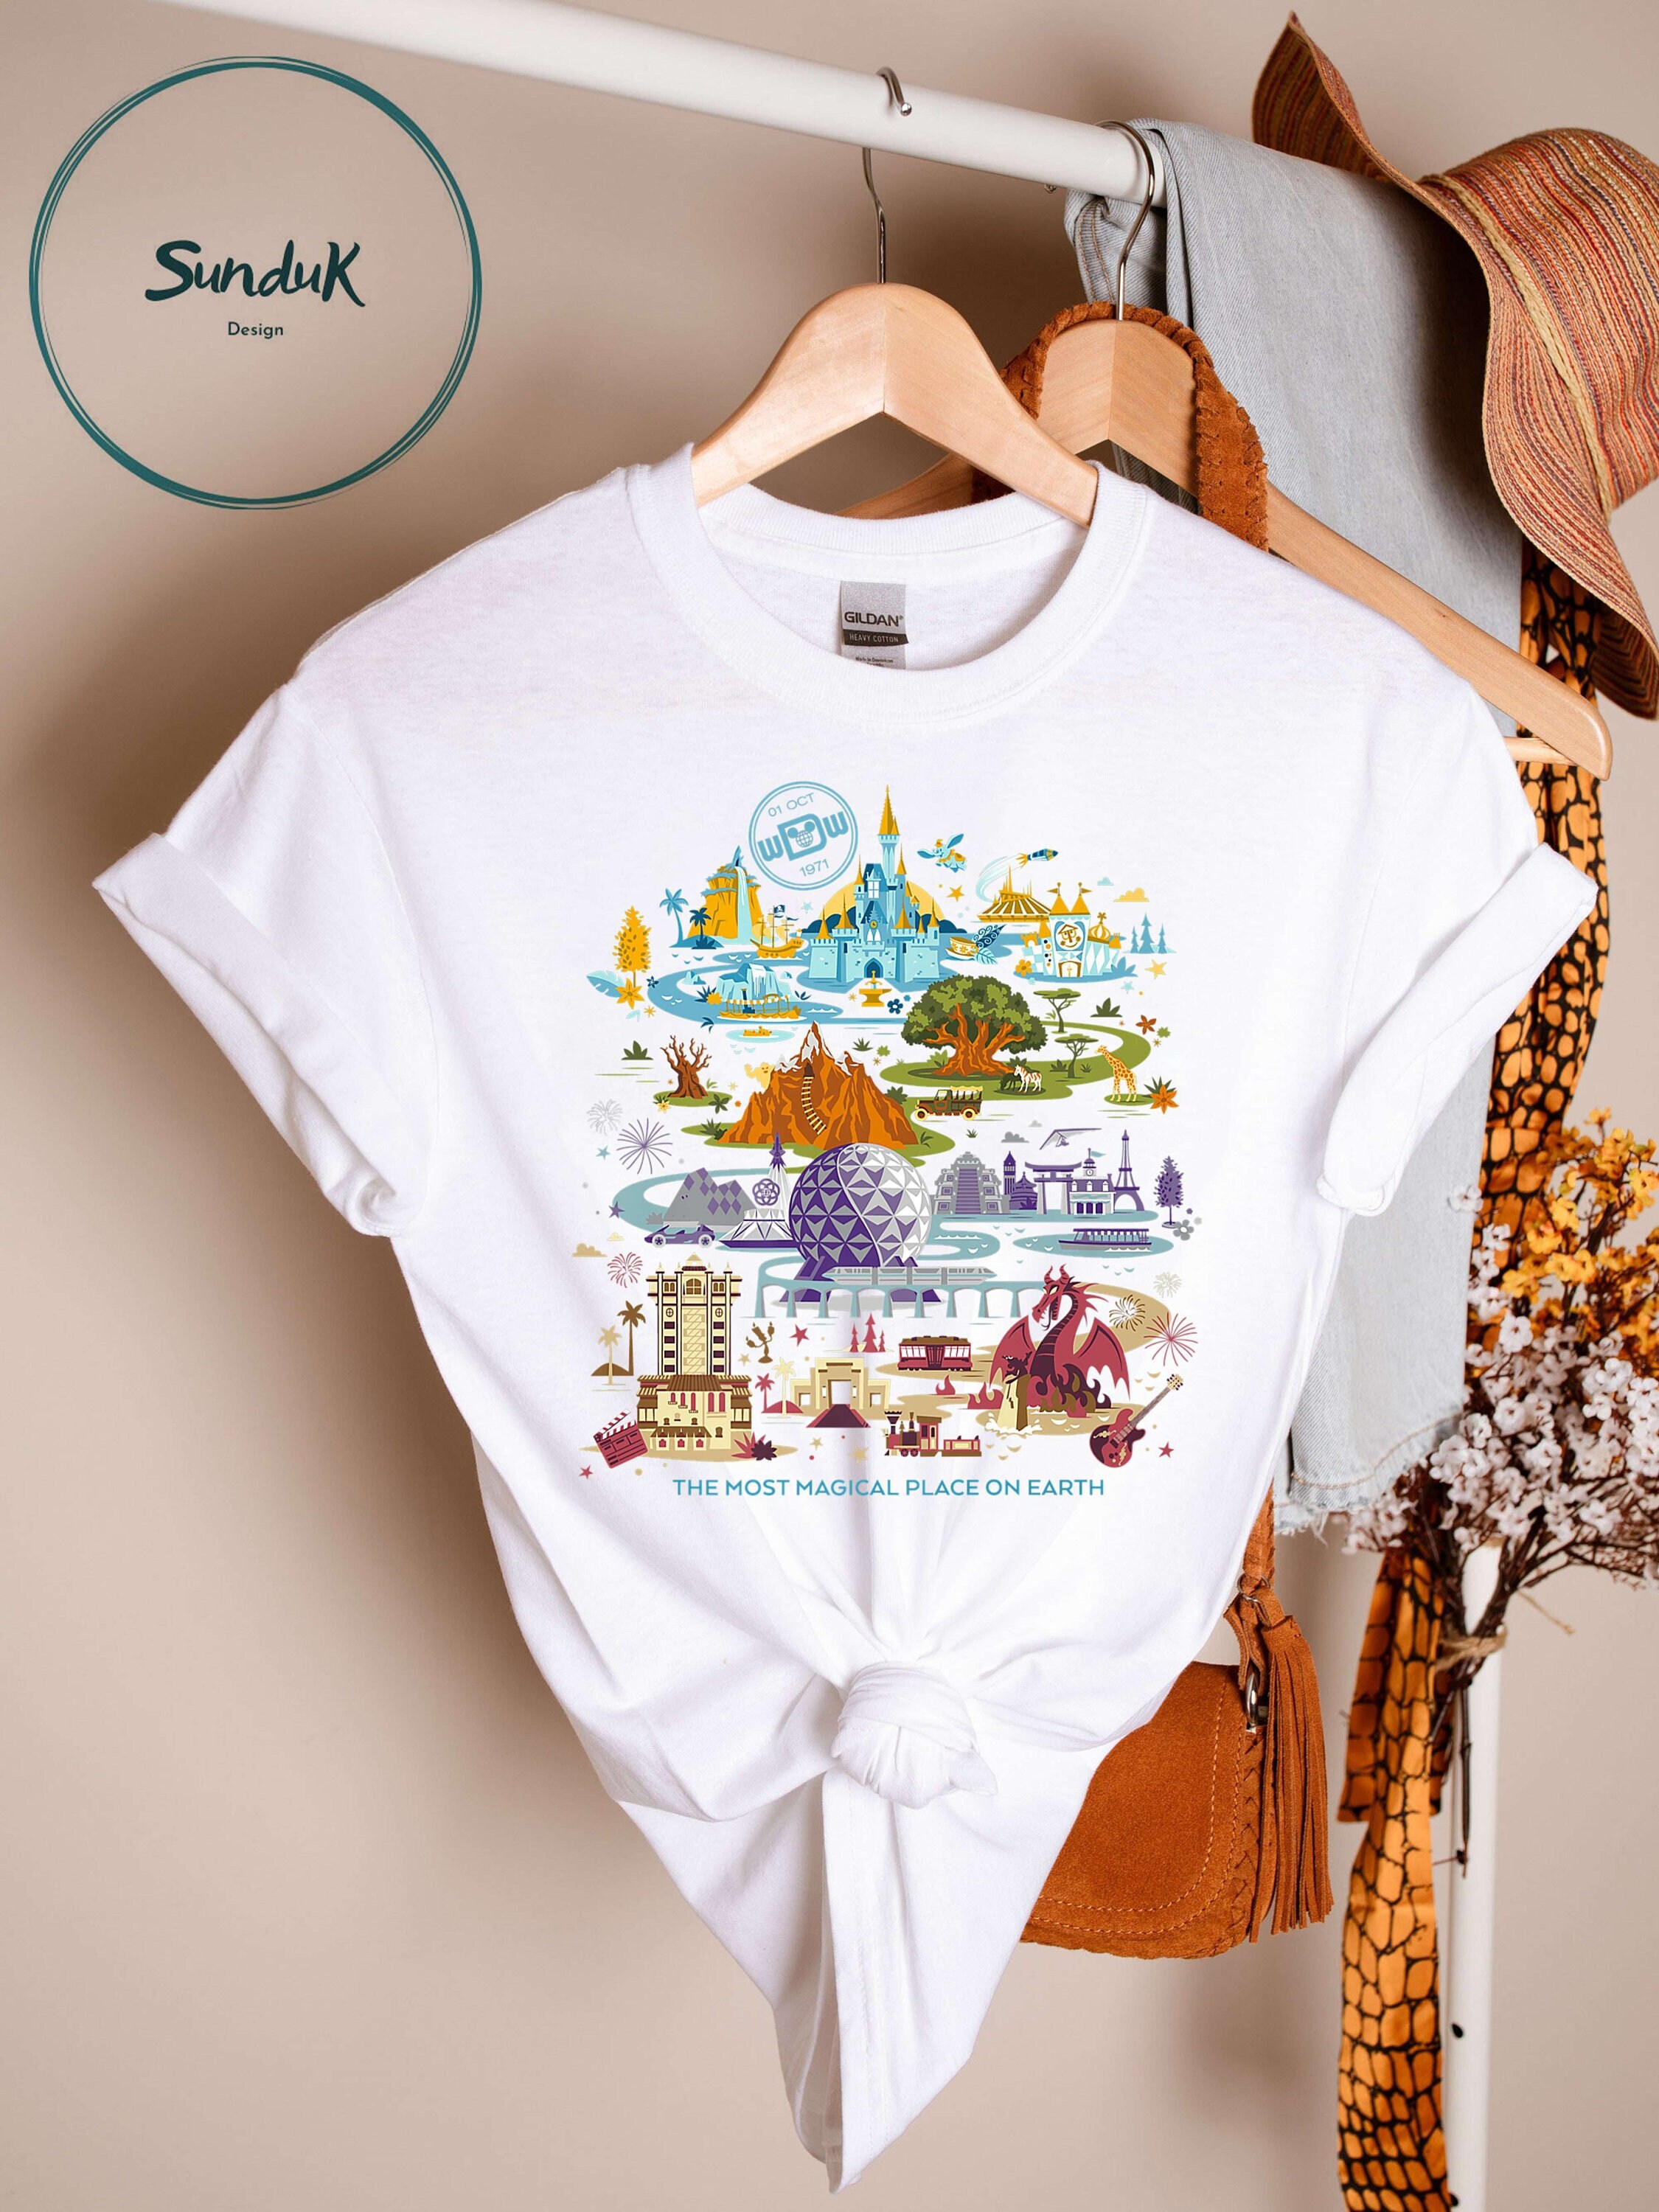 Discover Disney 50th Anniversary Celebration Shirt, Disney Vacation Shirt, Disney World 50th Anniversary Shirt